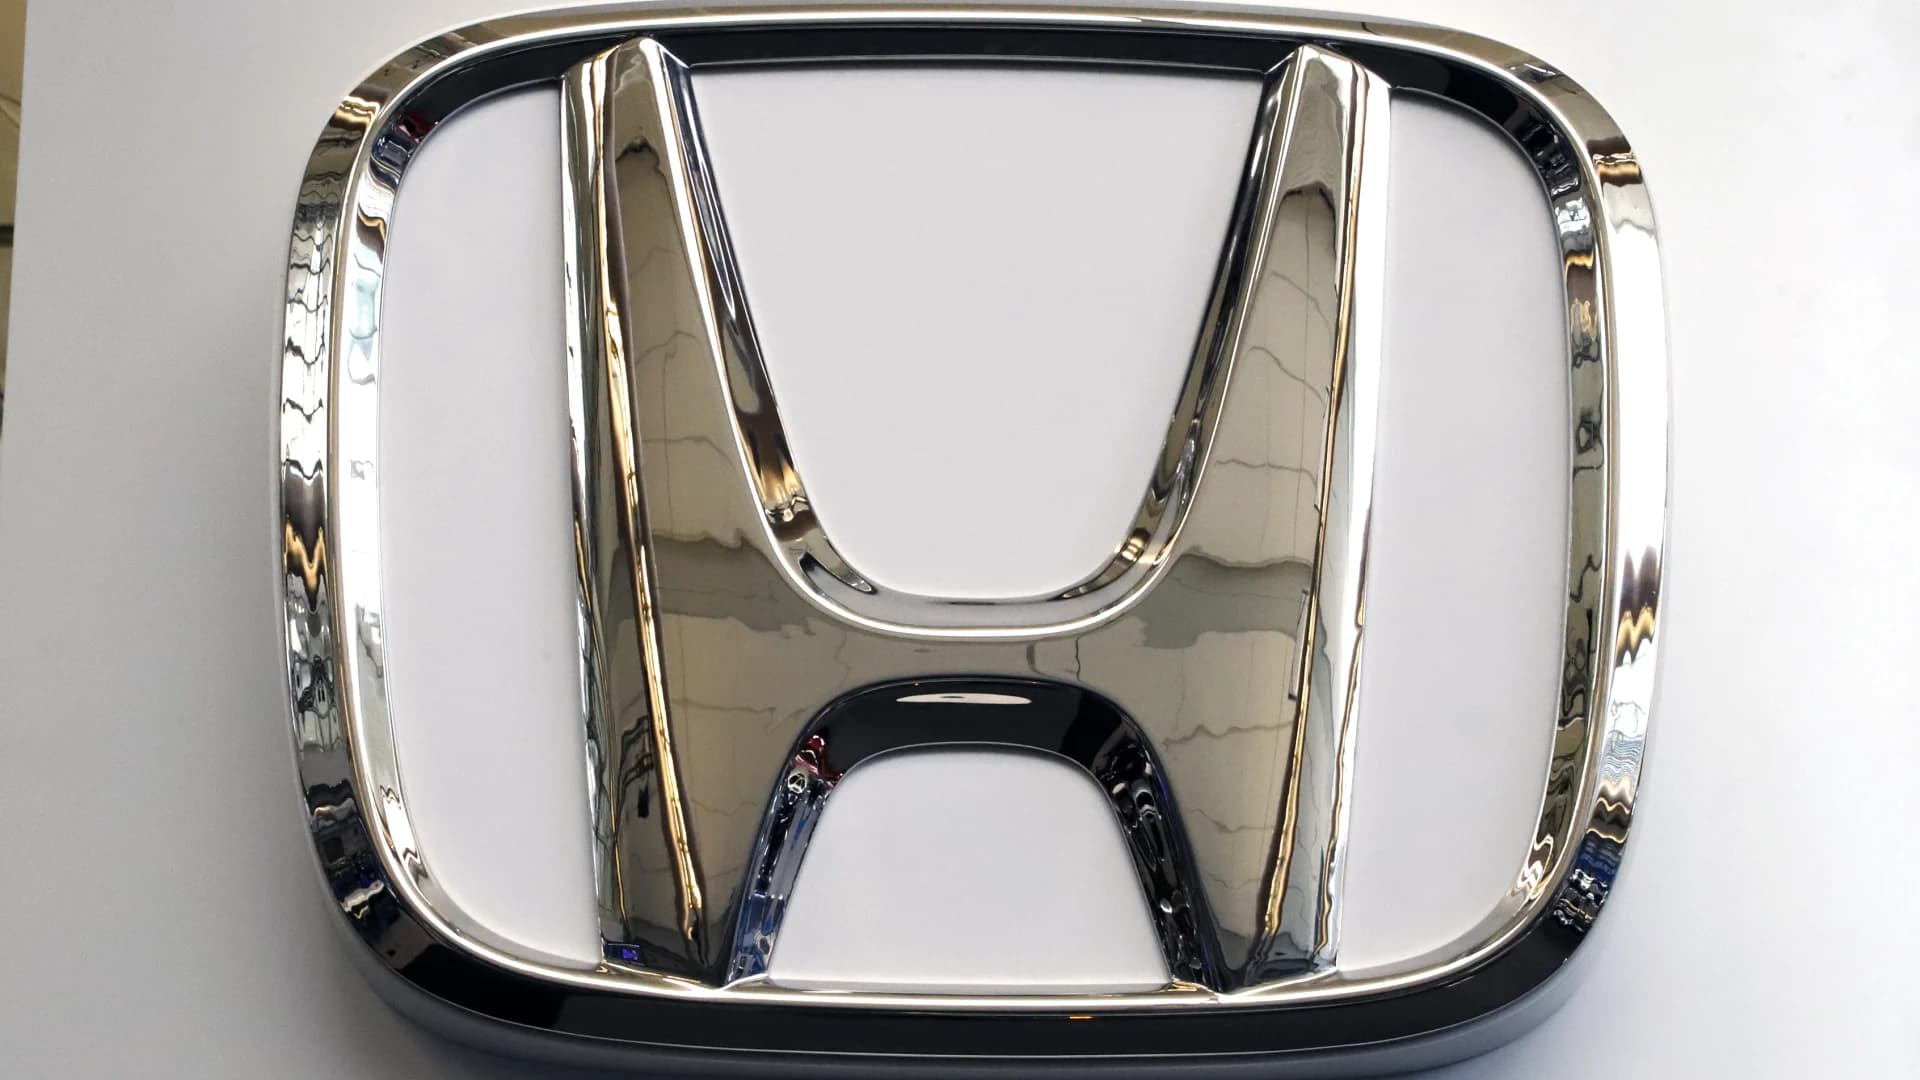 Honda recalls CR-Vs in cold states to fix frame rust problem